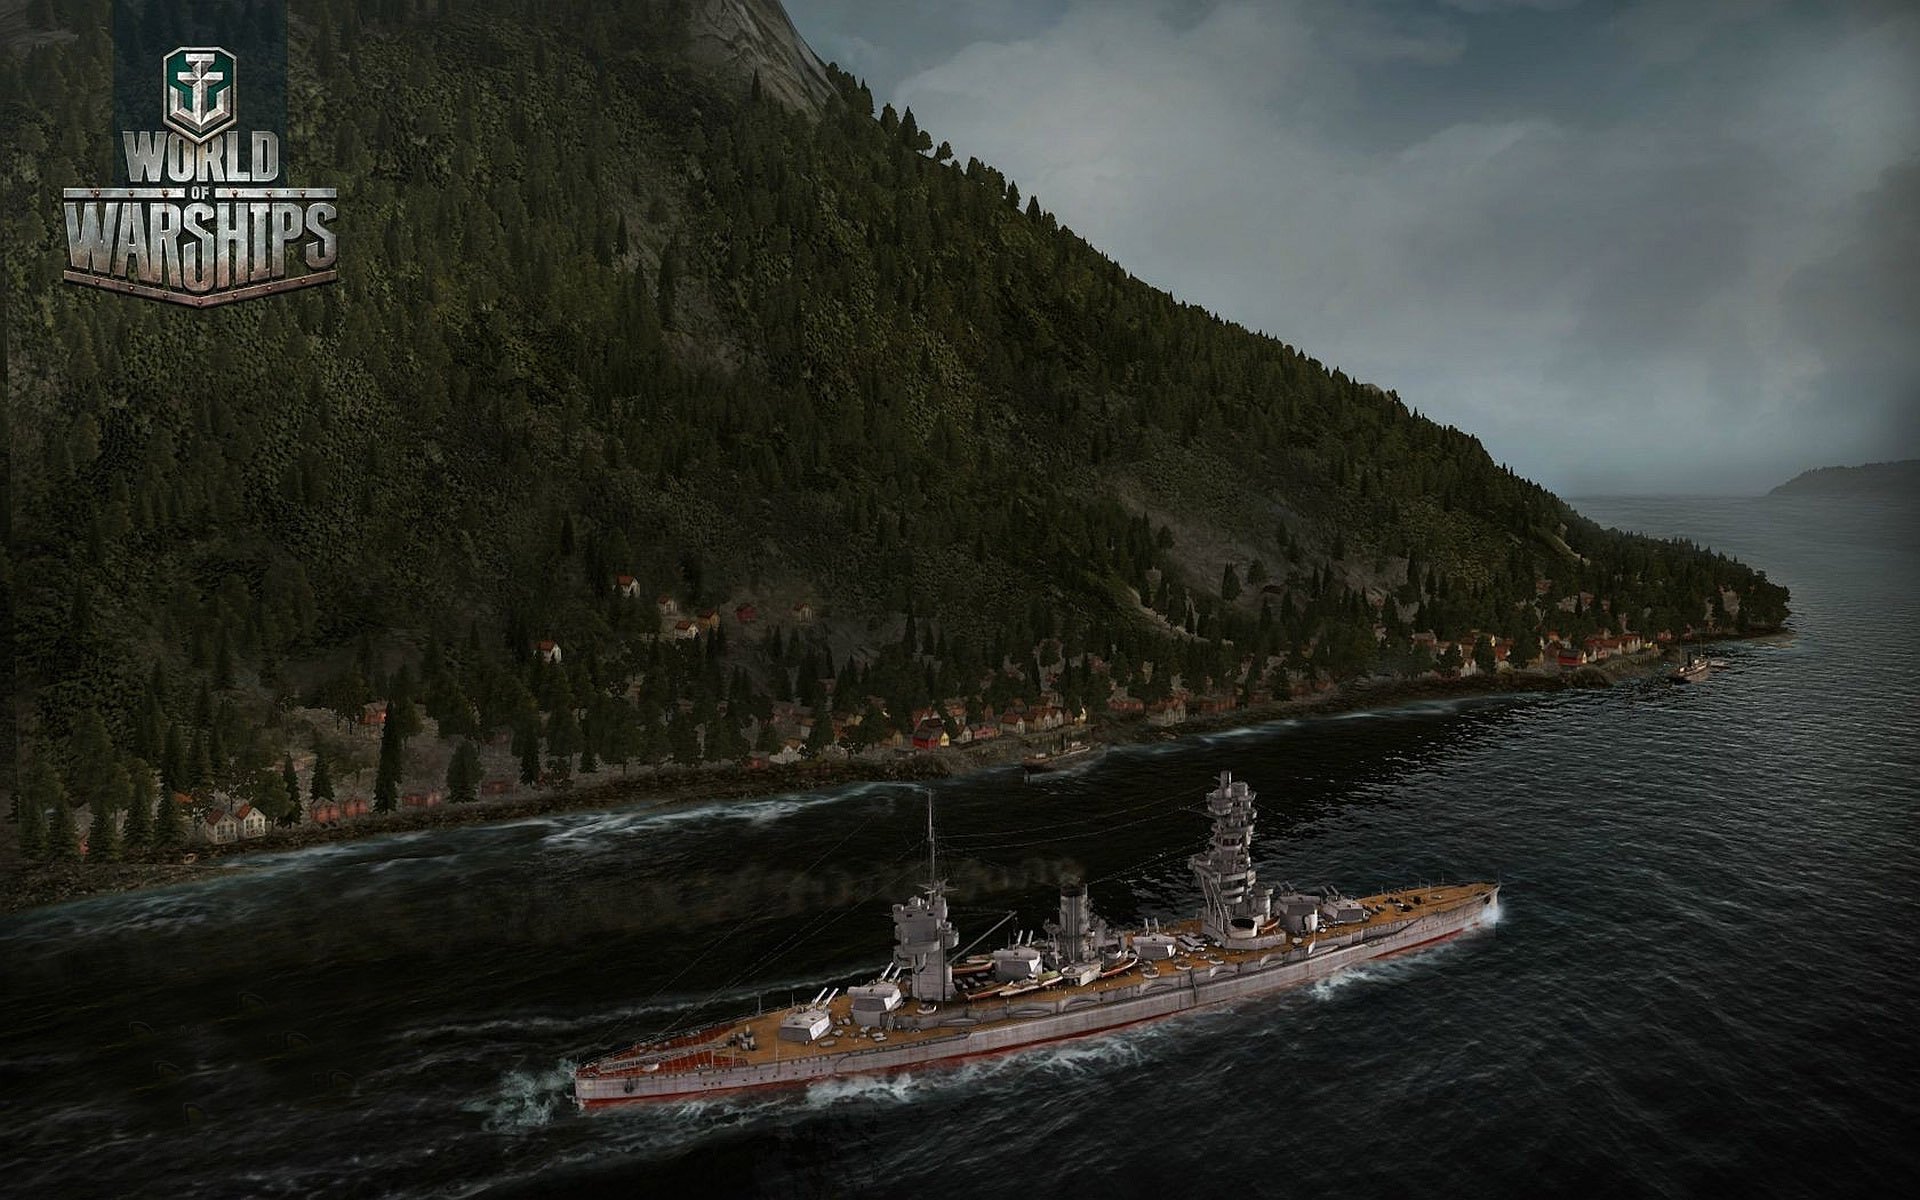 battleship online game